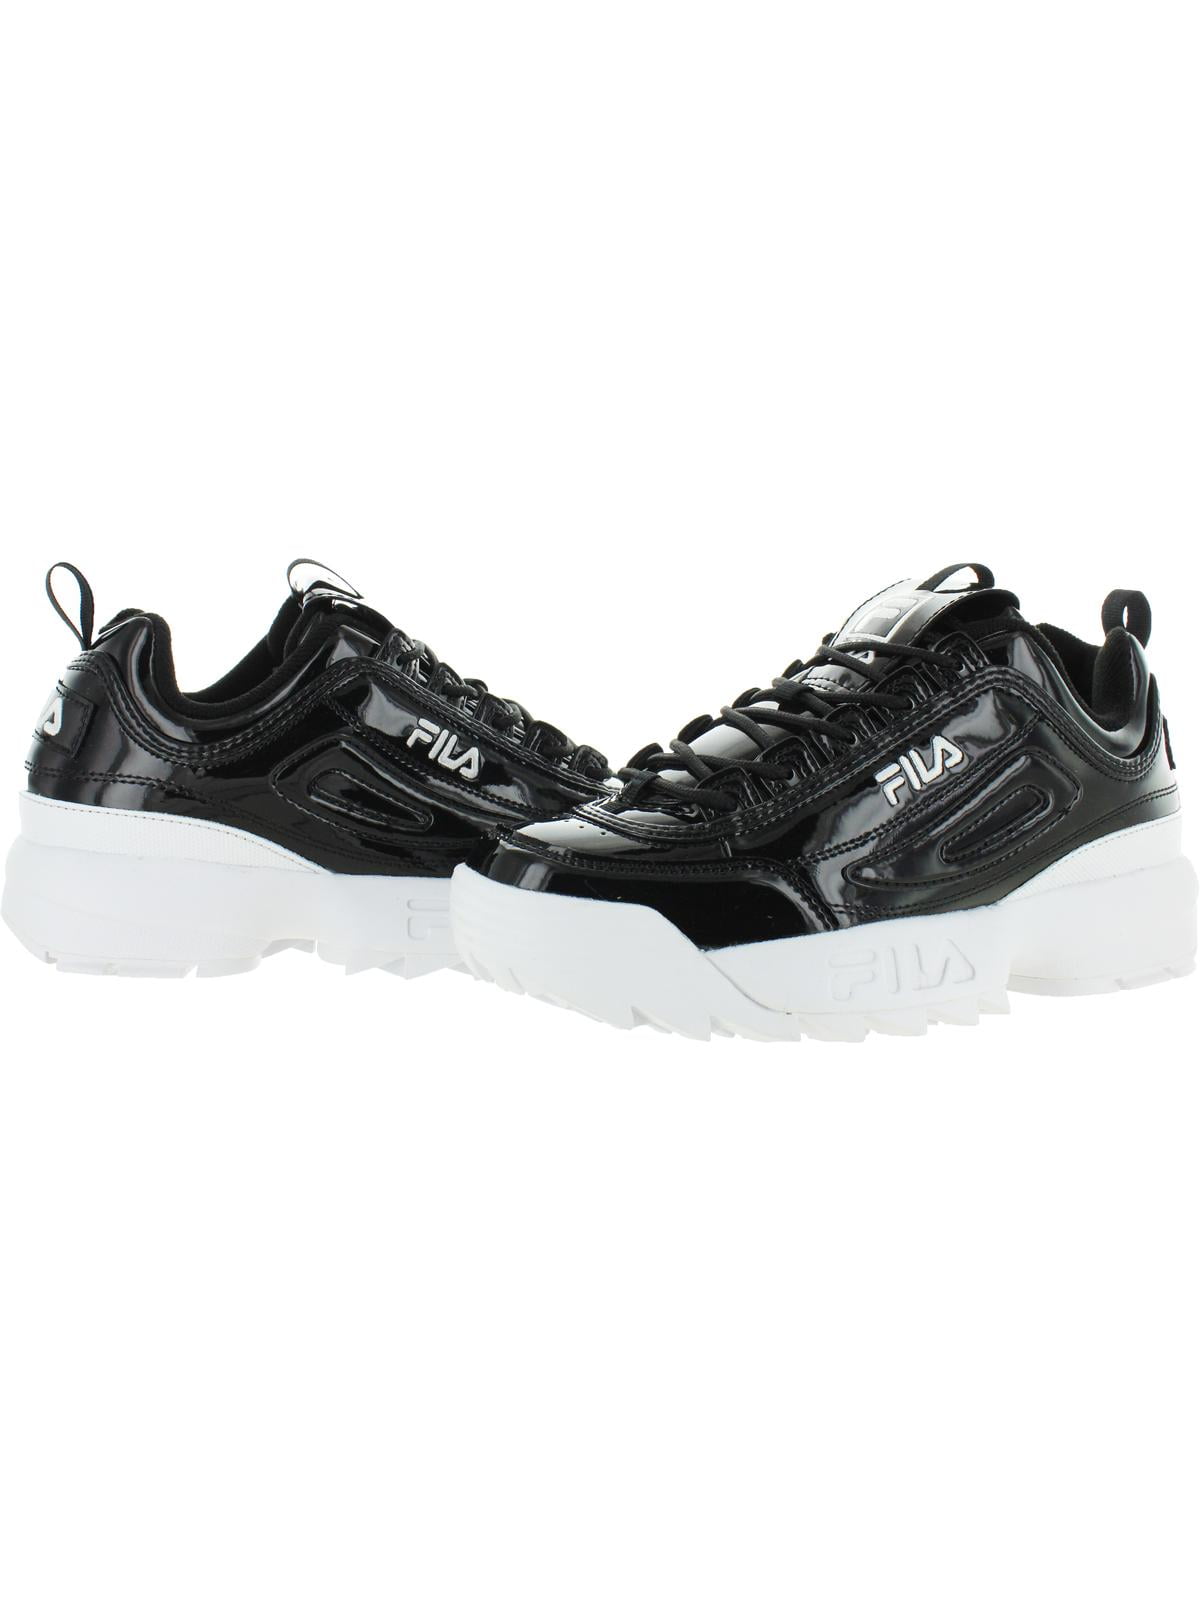 Fila II Premium Patent Women's Shoes Black-White - Walmart.com